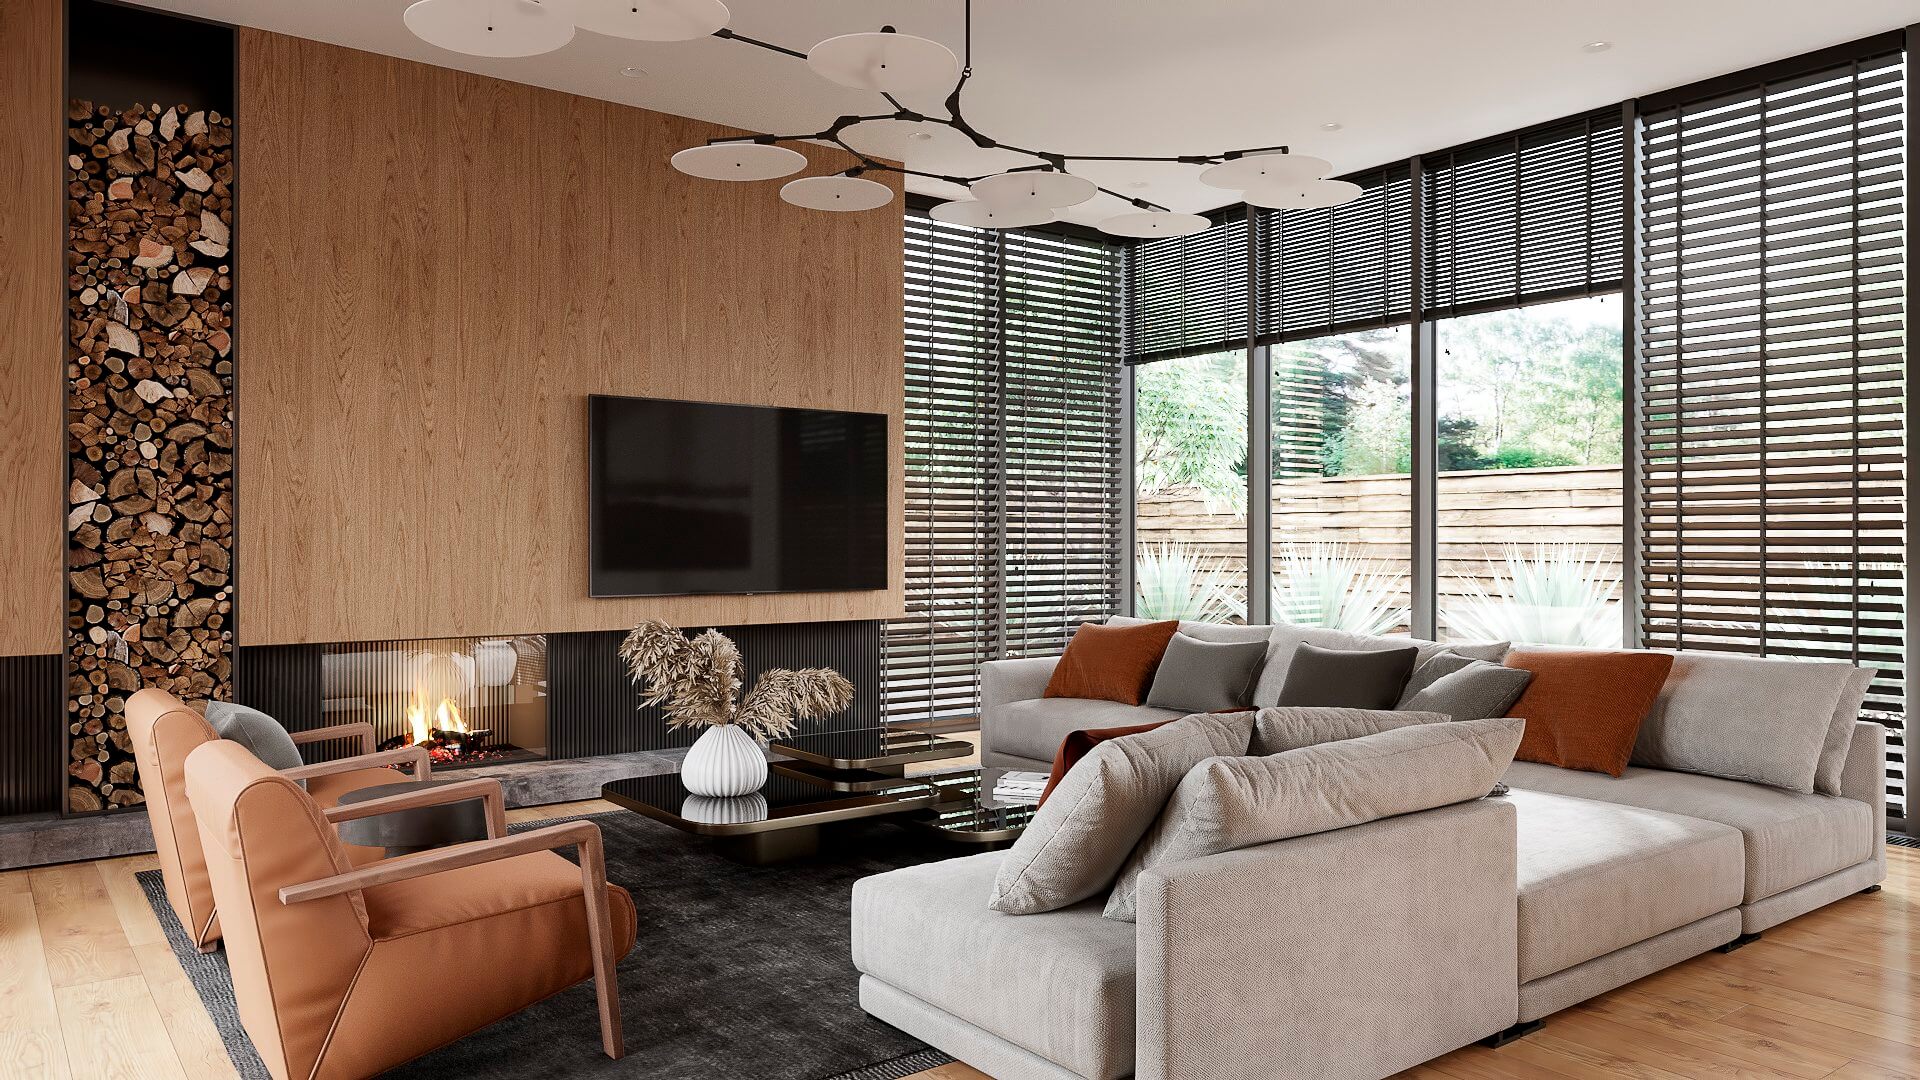 3d wall design for living room